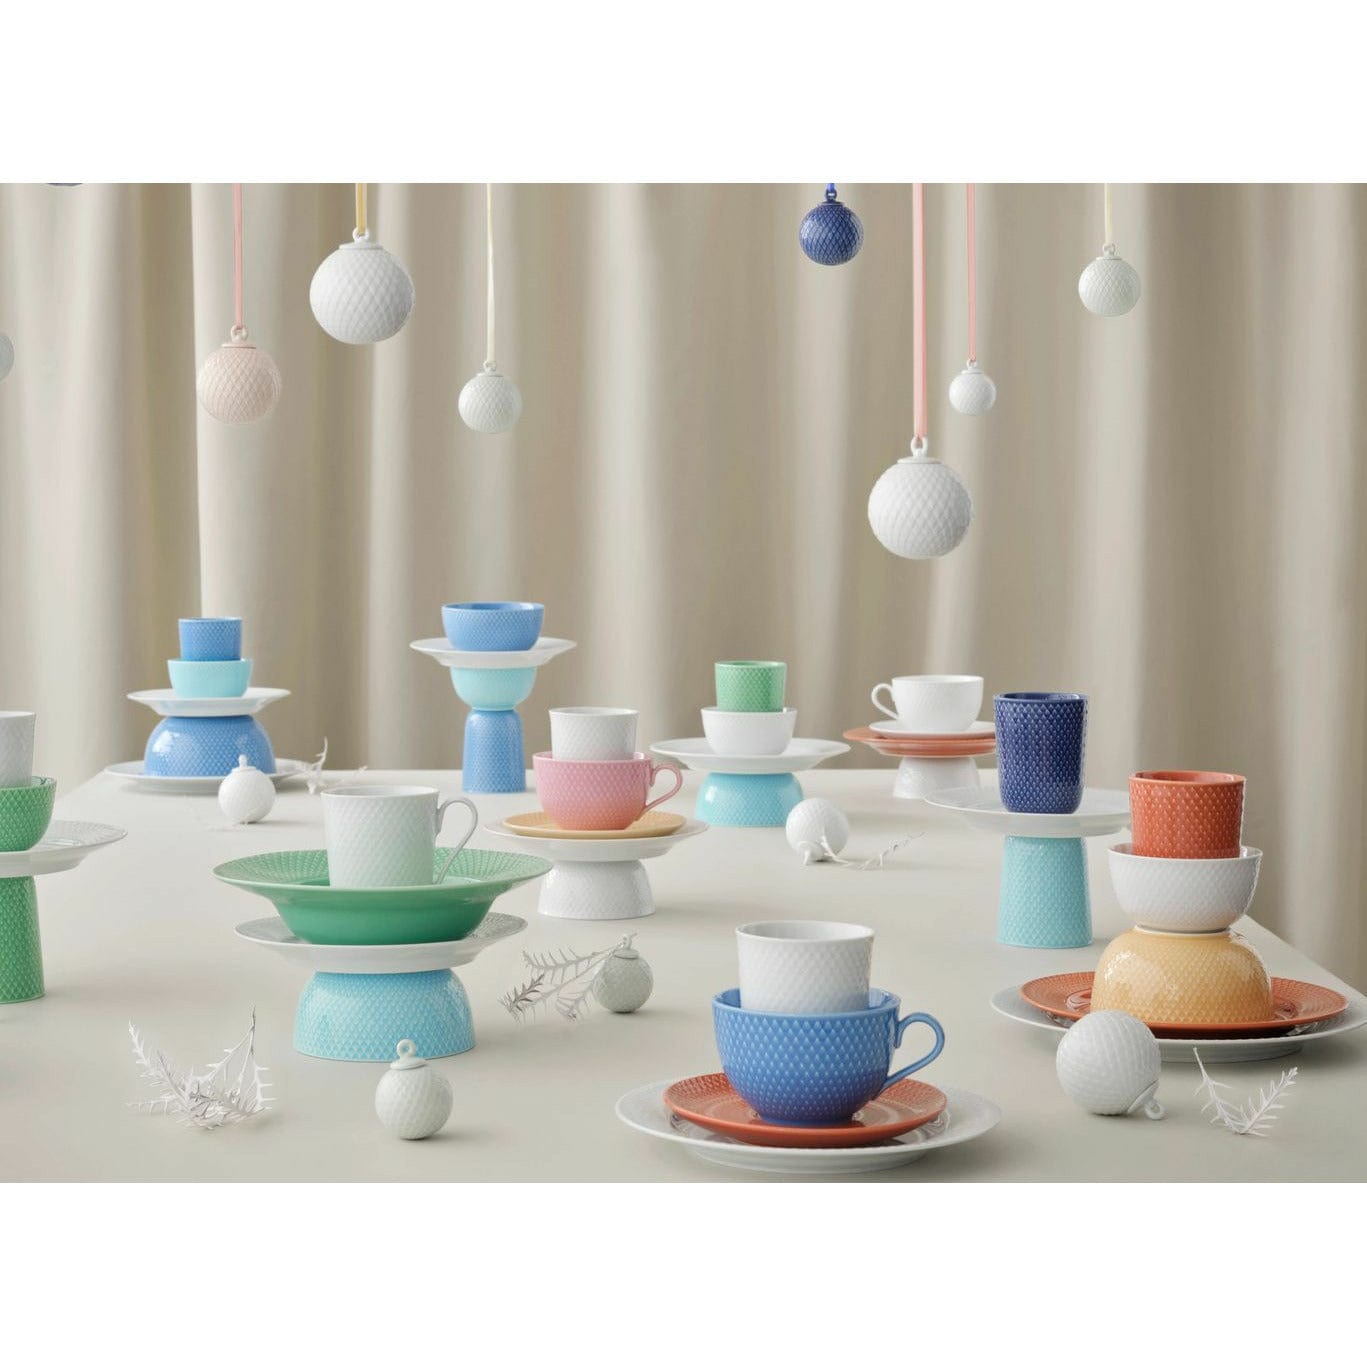 Lyngby Porcelæn Rhombe Color Tea Cup met schotel, roze/beige